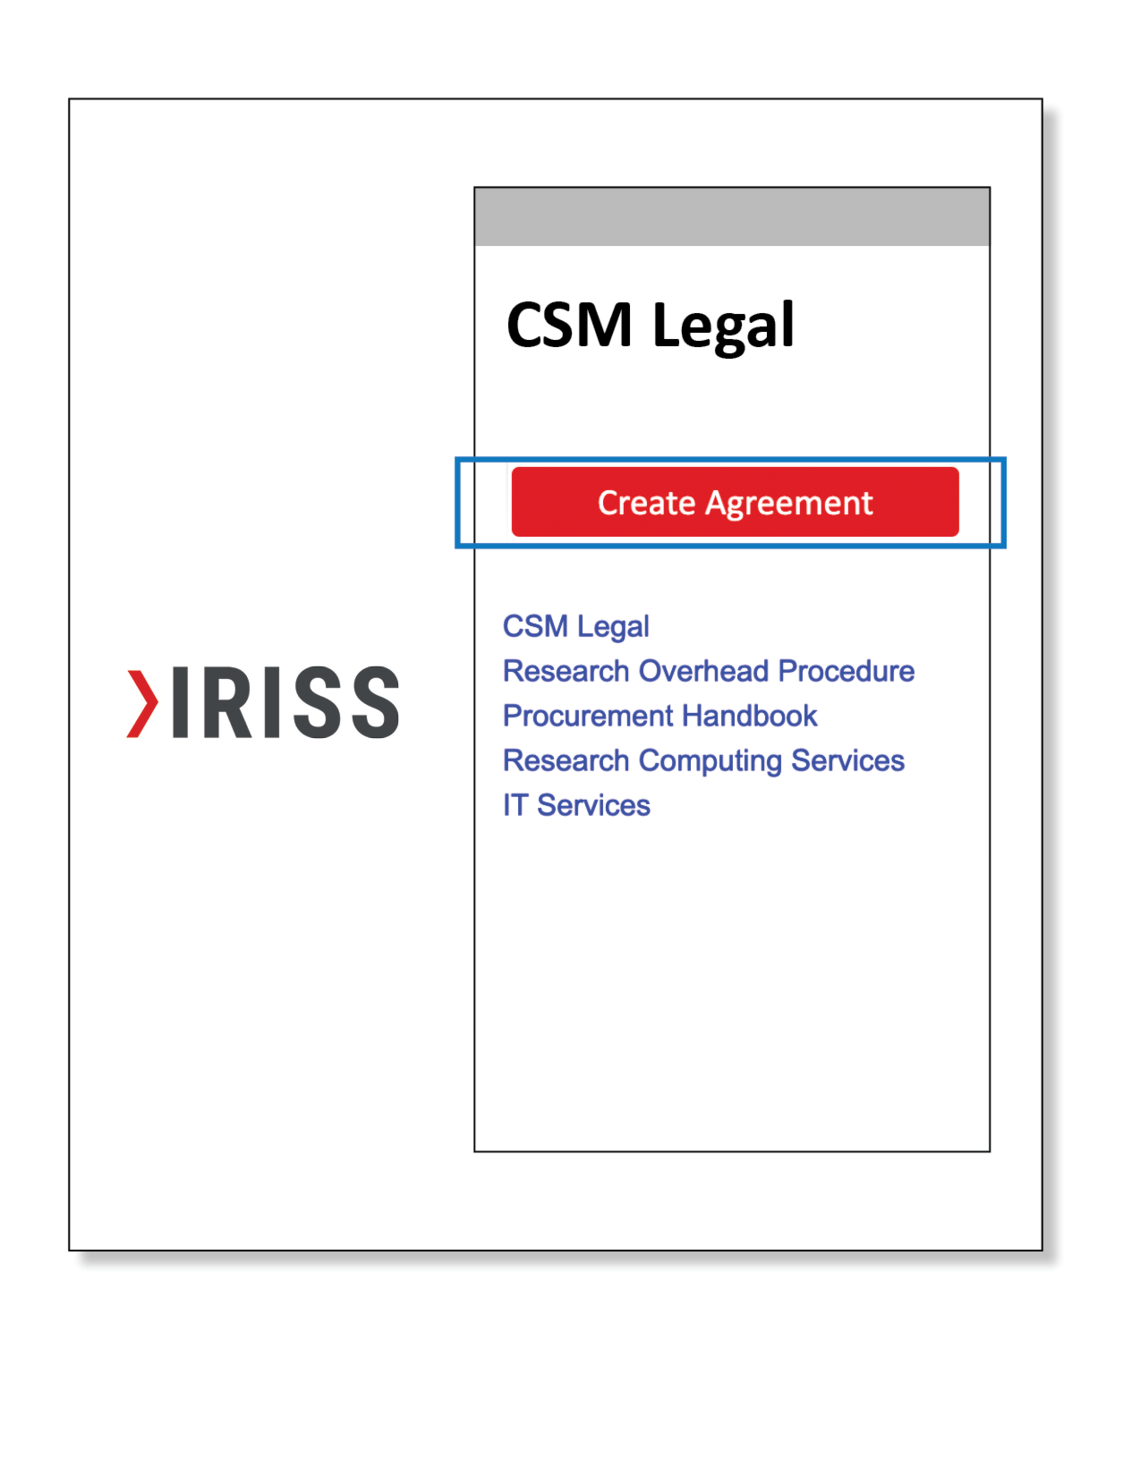 Create an agreement button in the IRISS menu